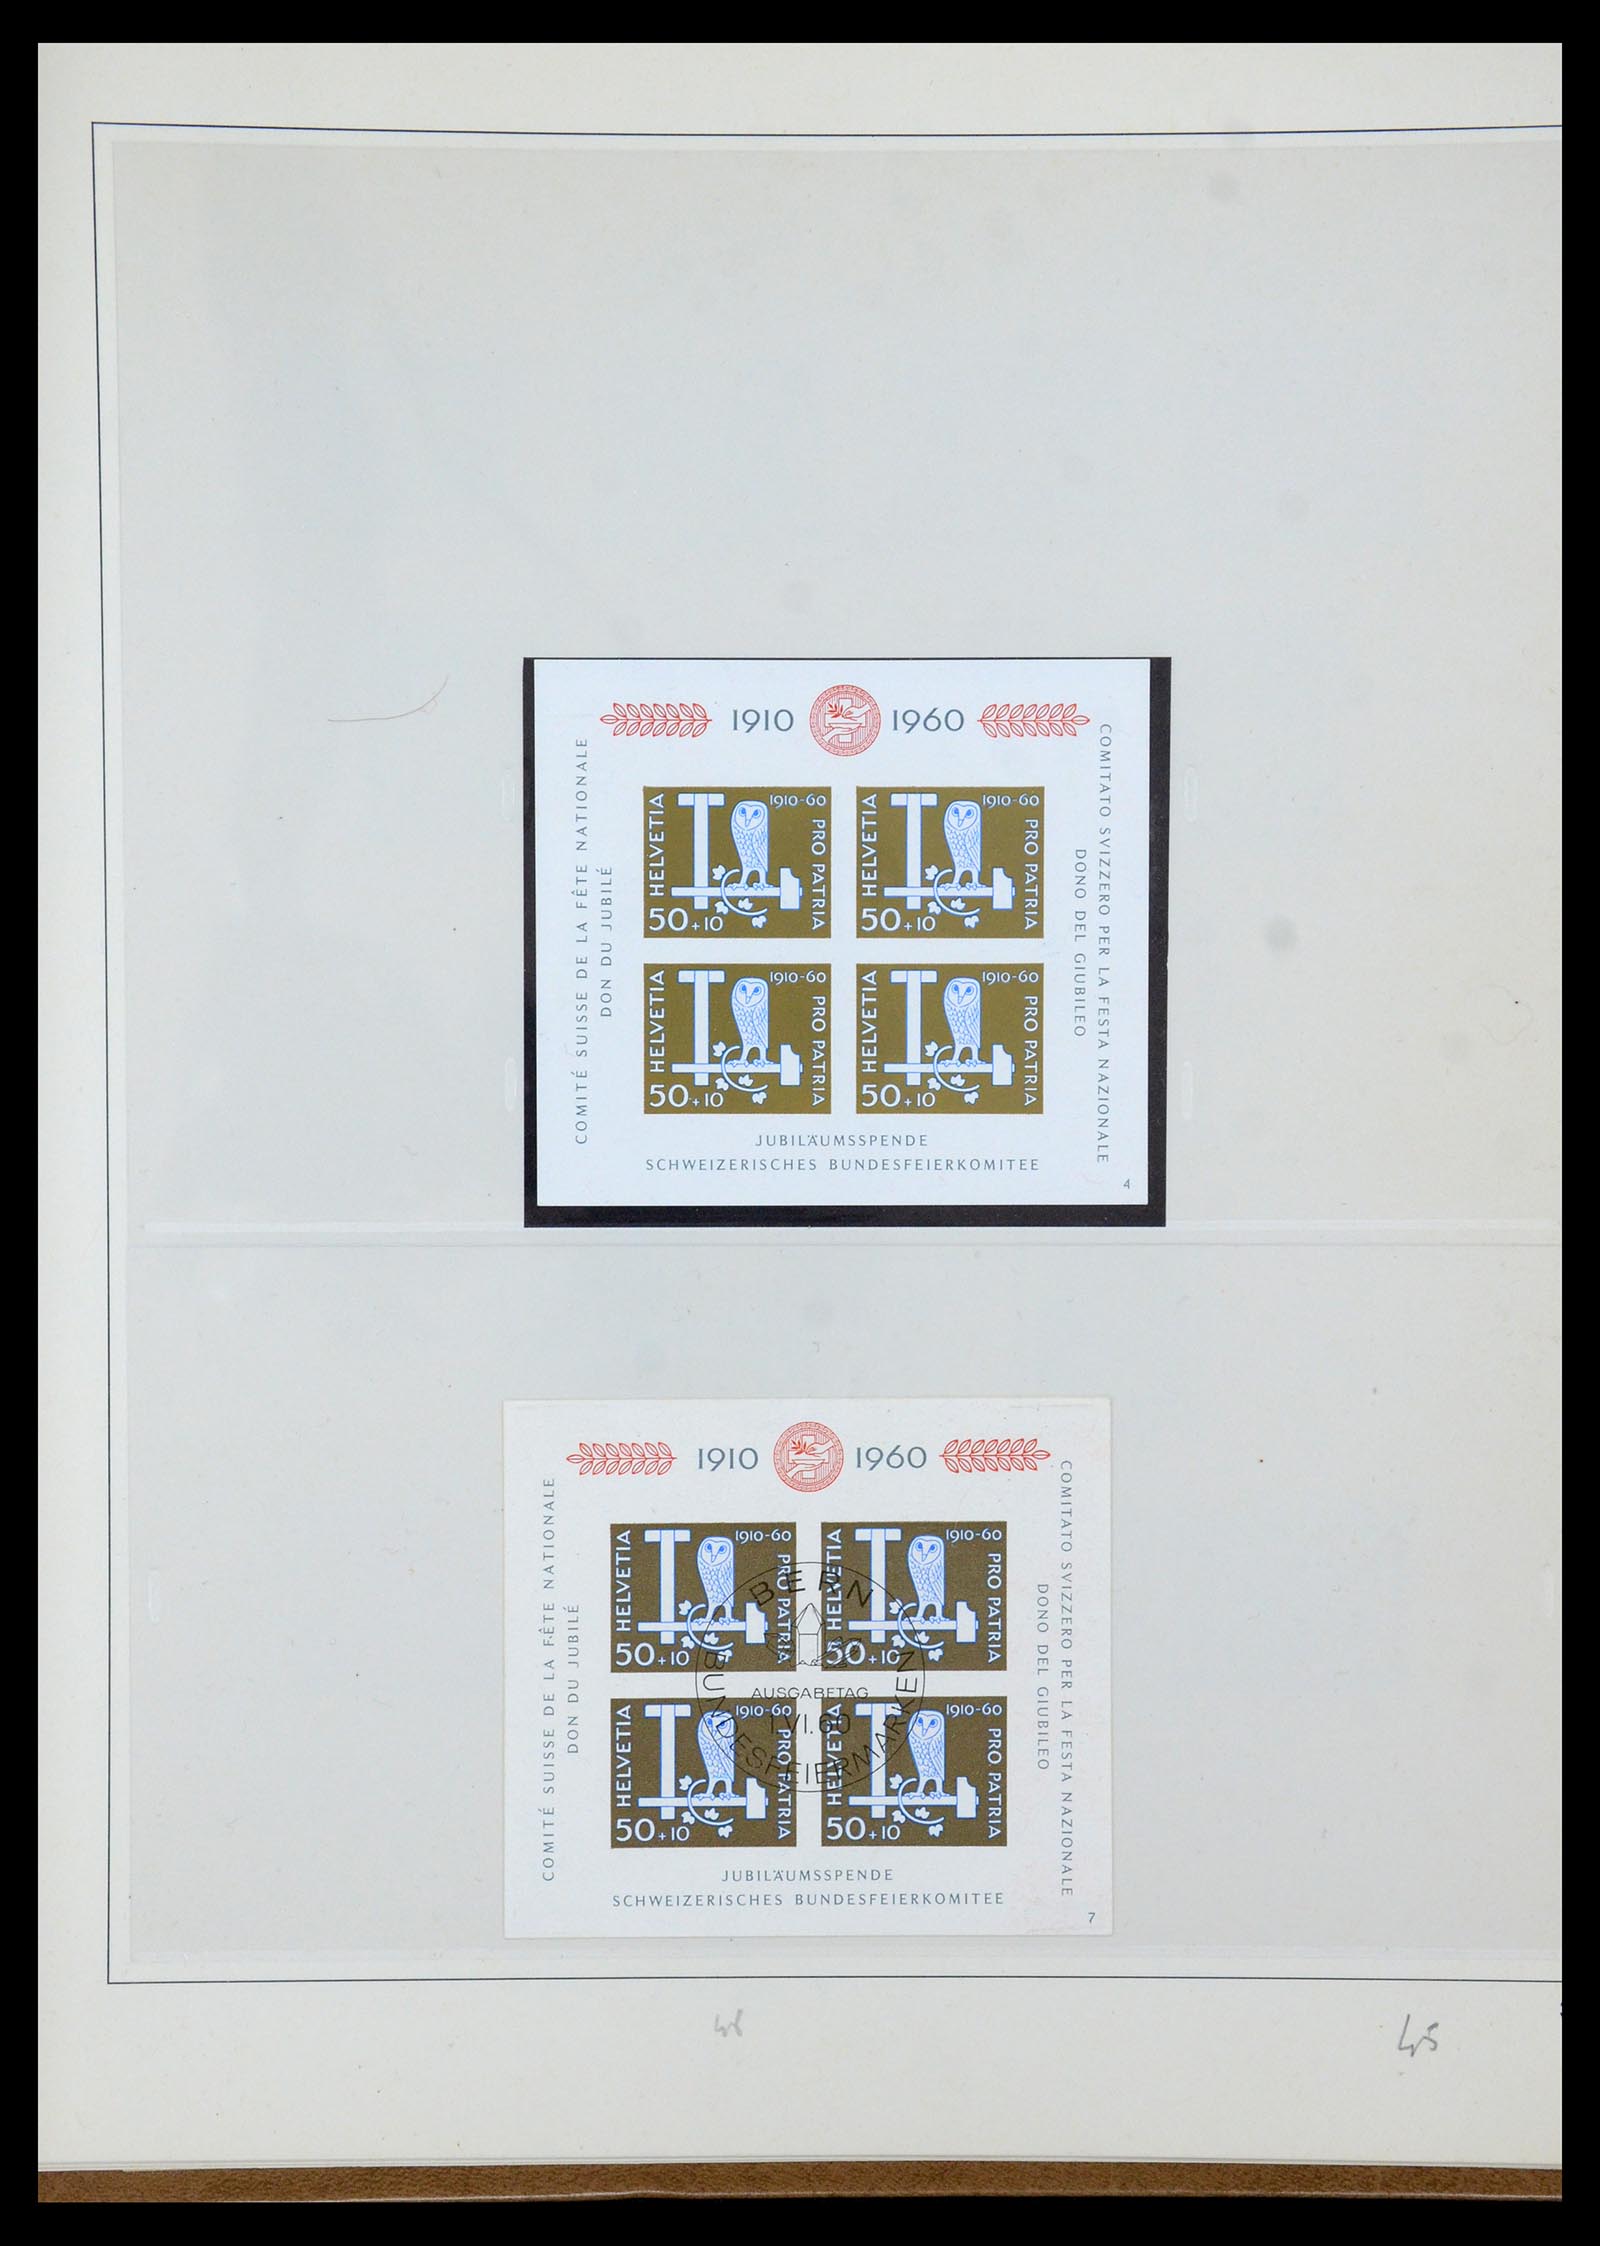 35605 073 - Stamp Collection 35605 Switzerland 1851-1985.